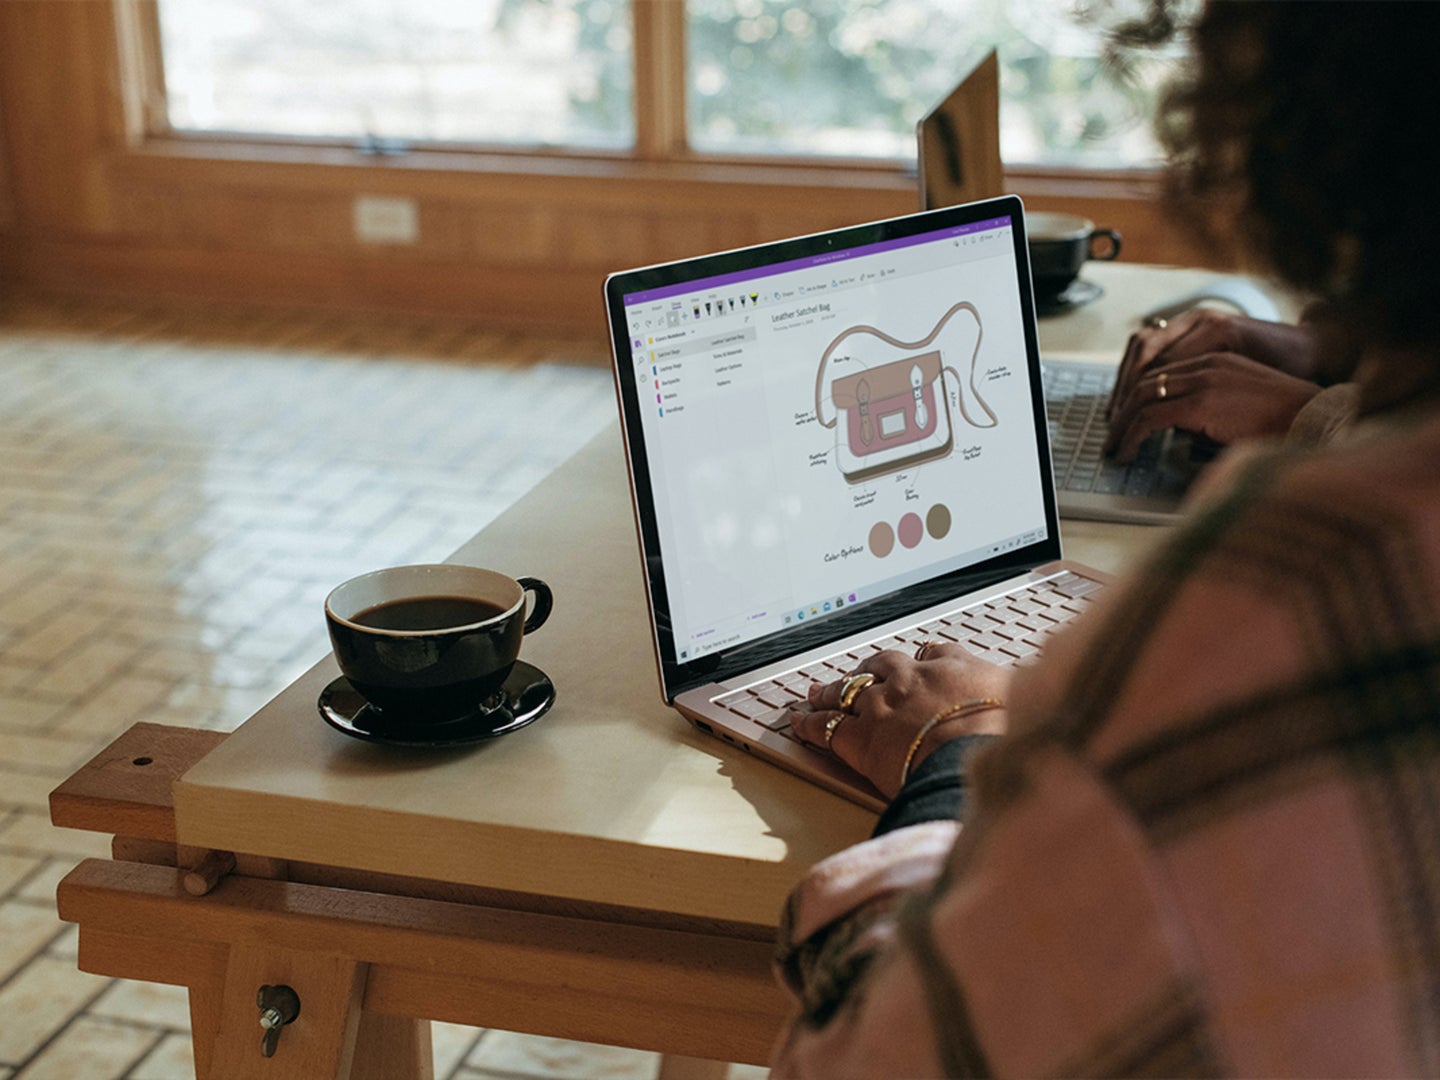 A person designs a purse on a laptop using a Microsoft program.